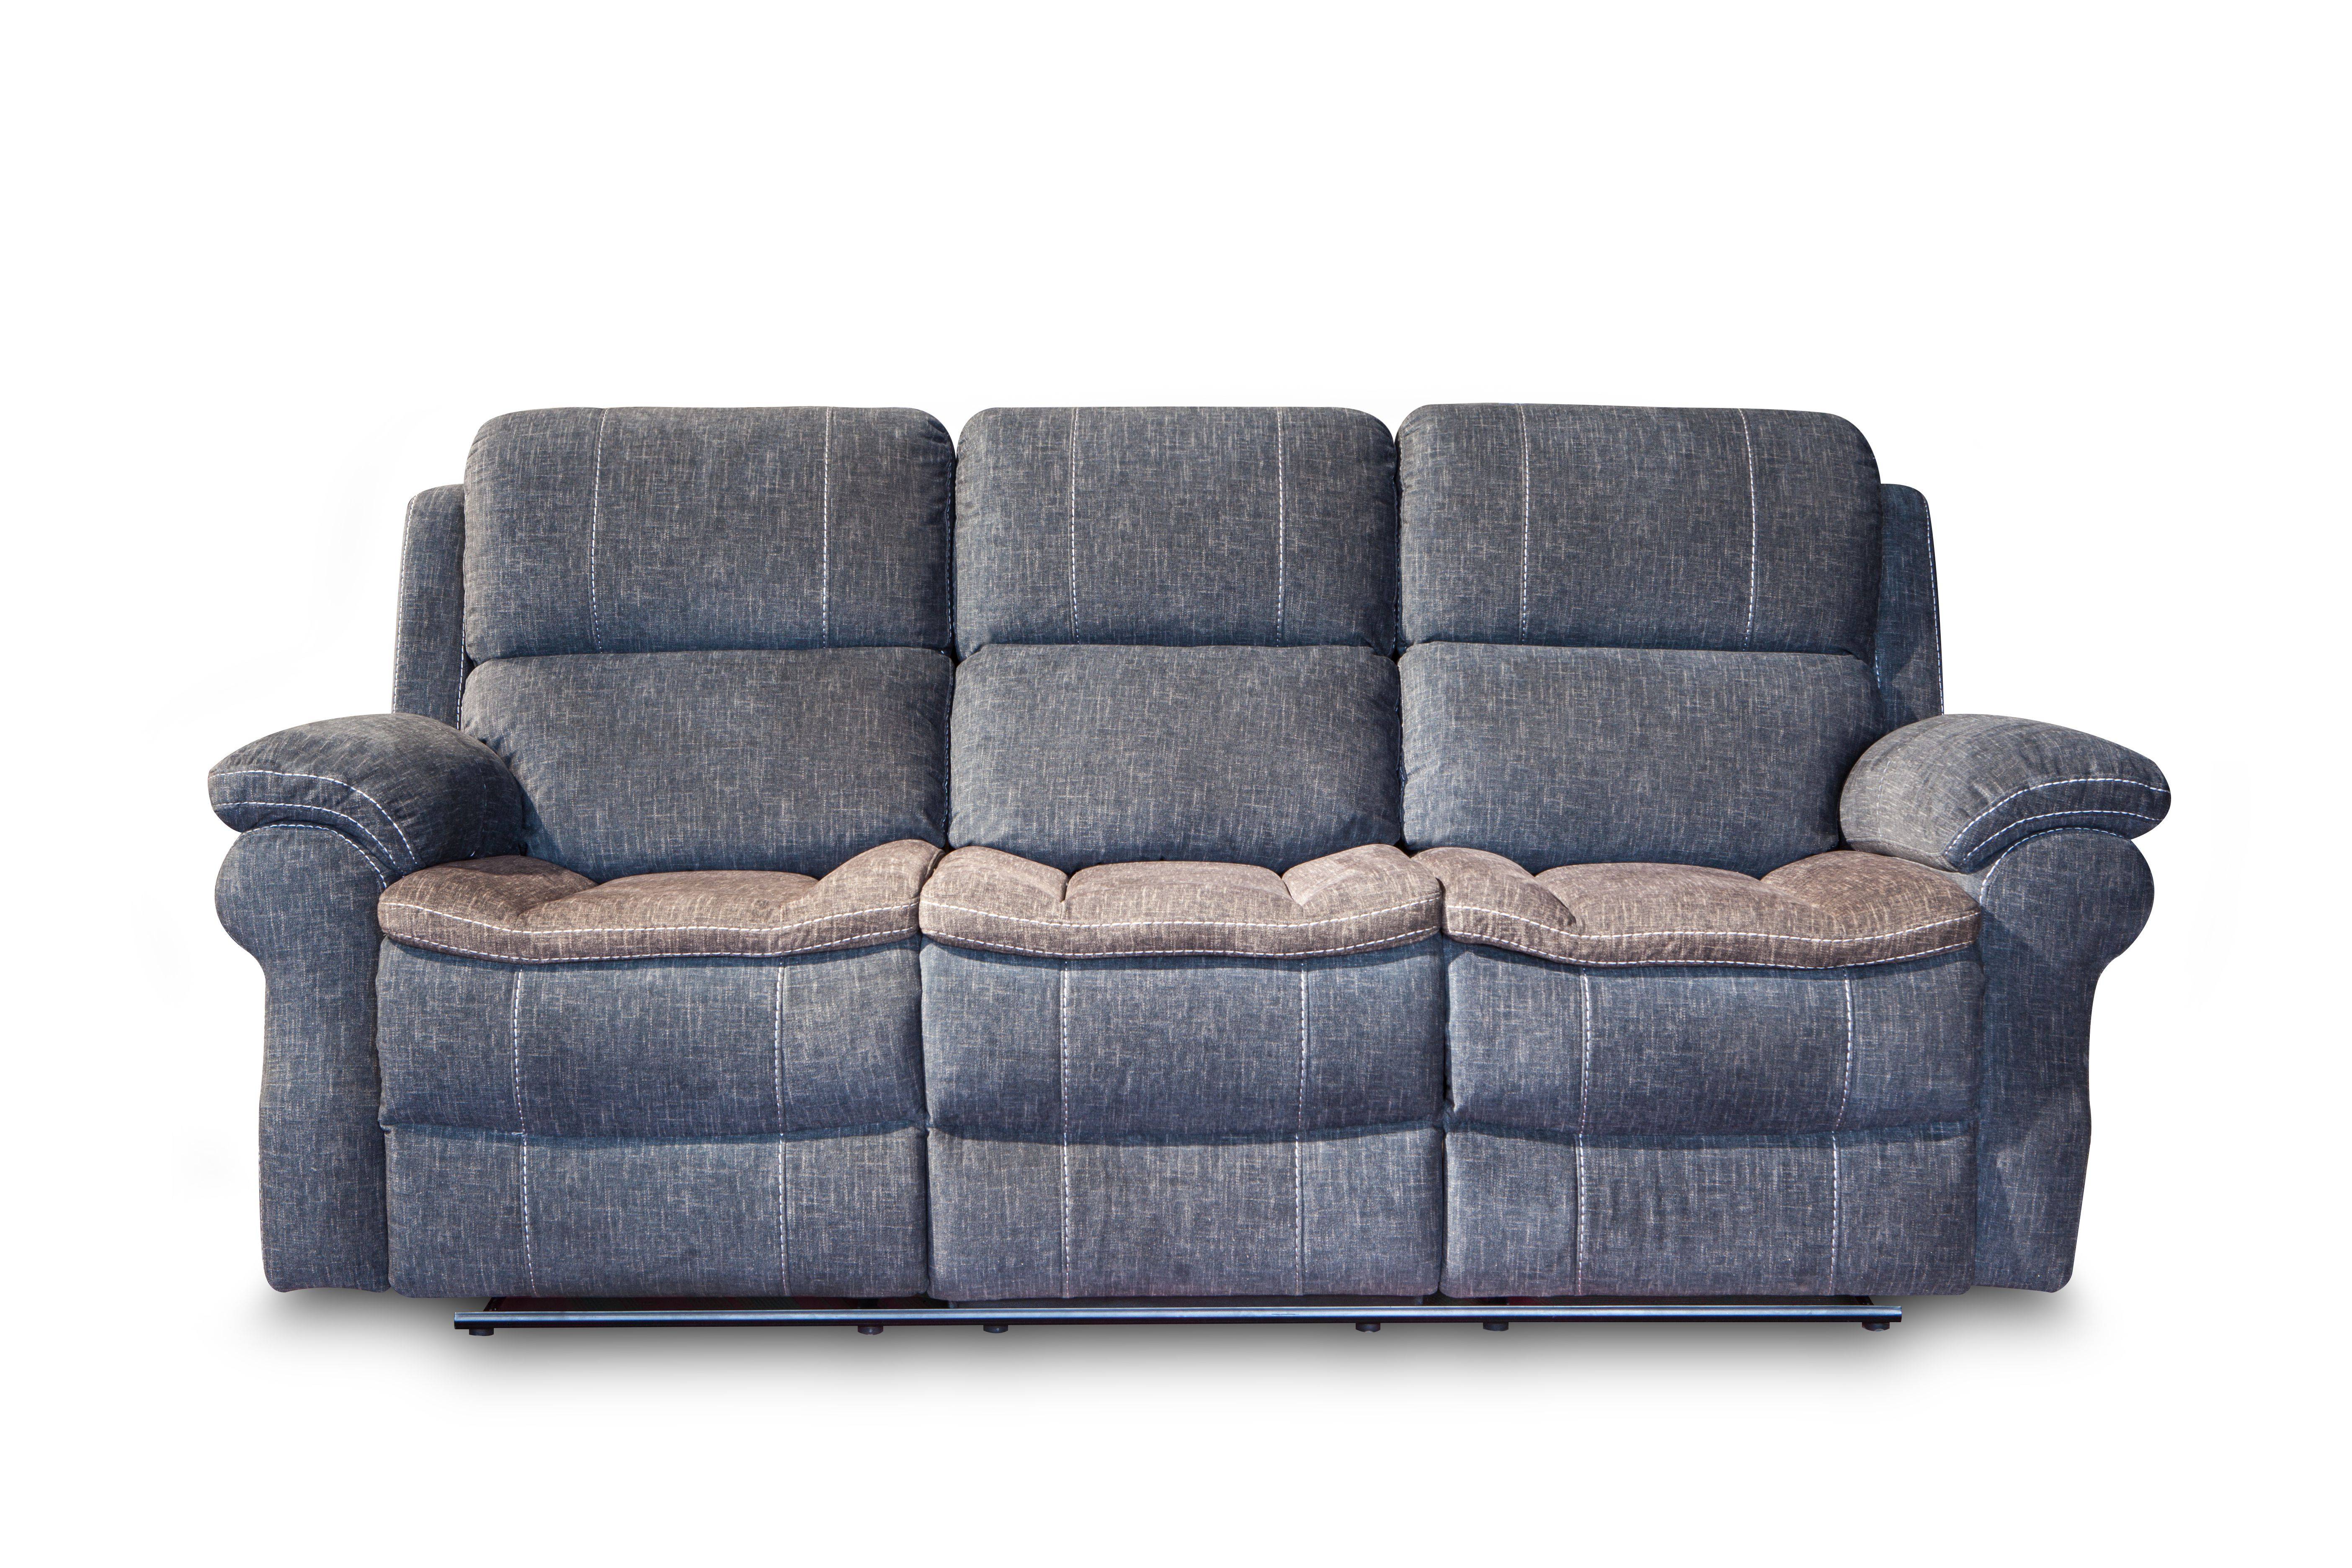 Newest best selling home furniture fabric corner modern sofa set